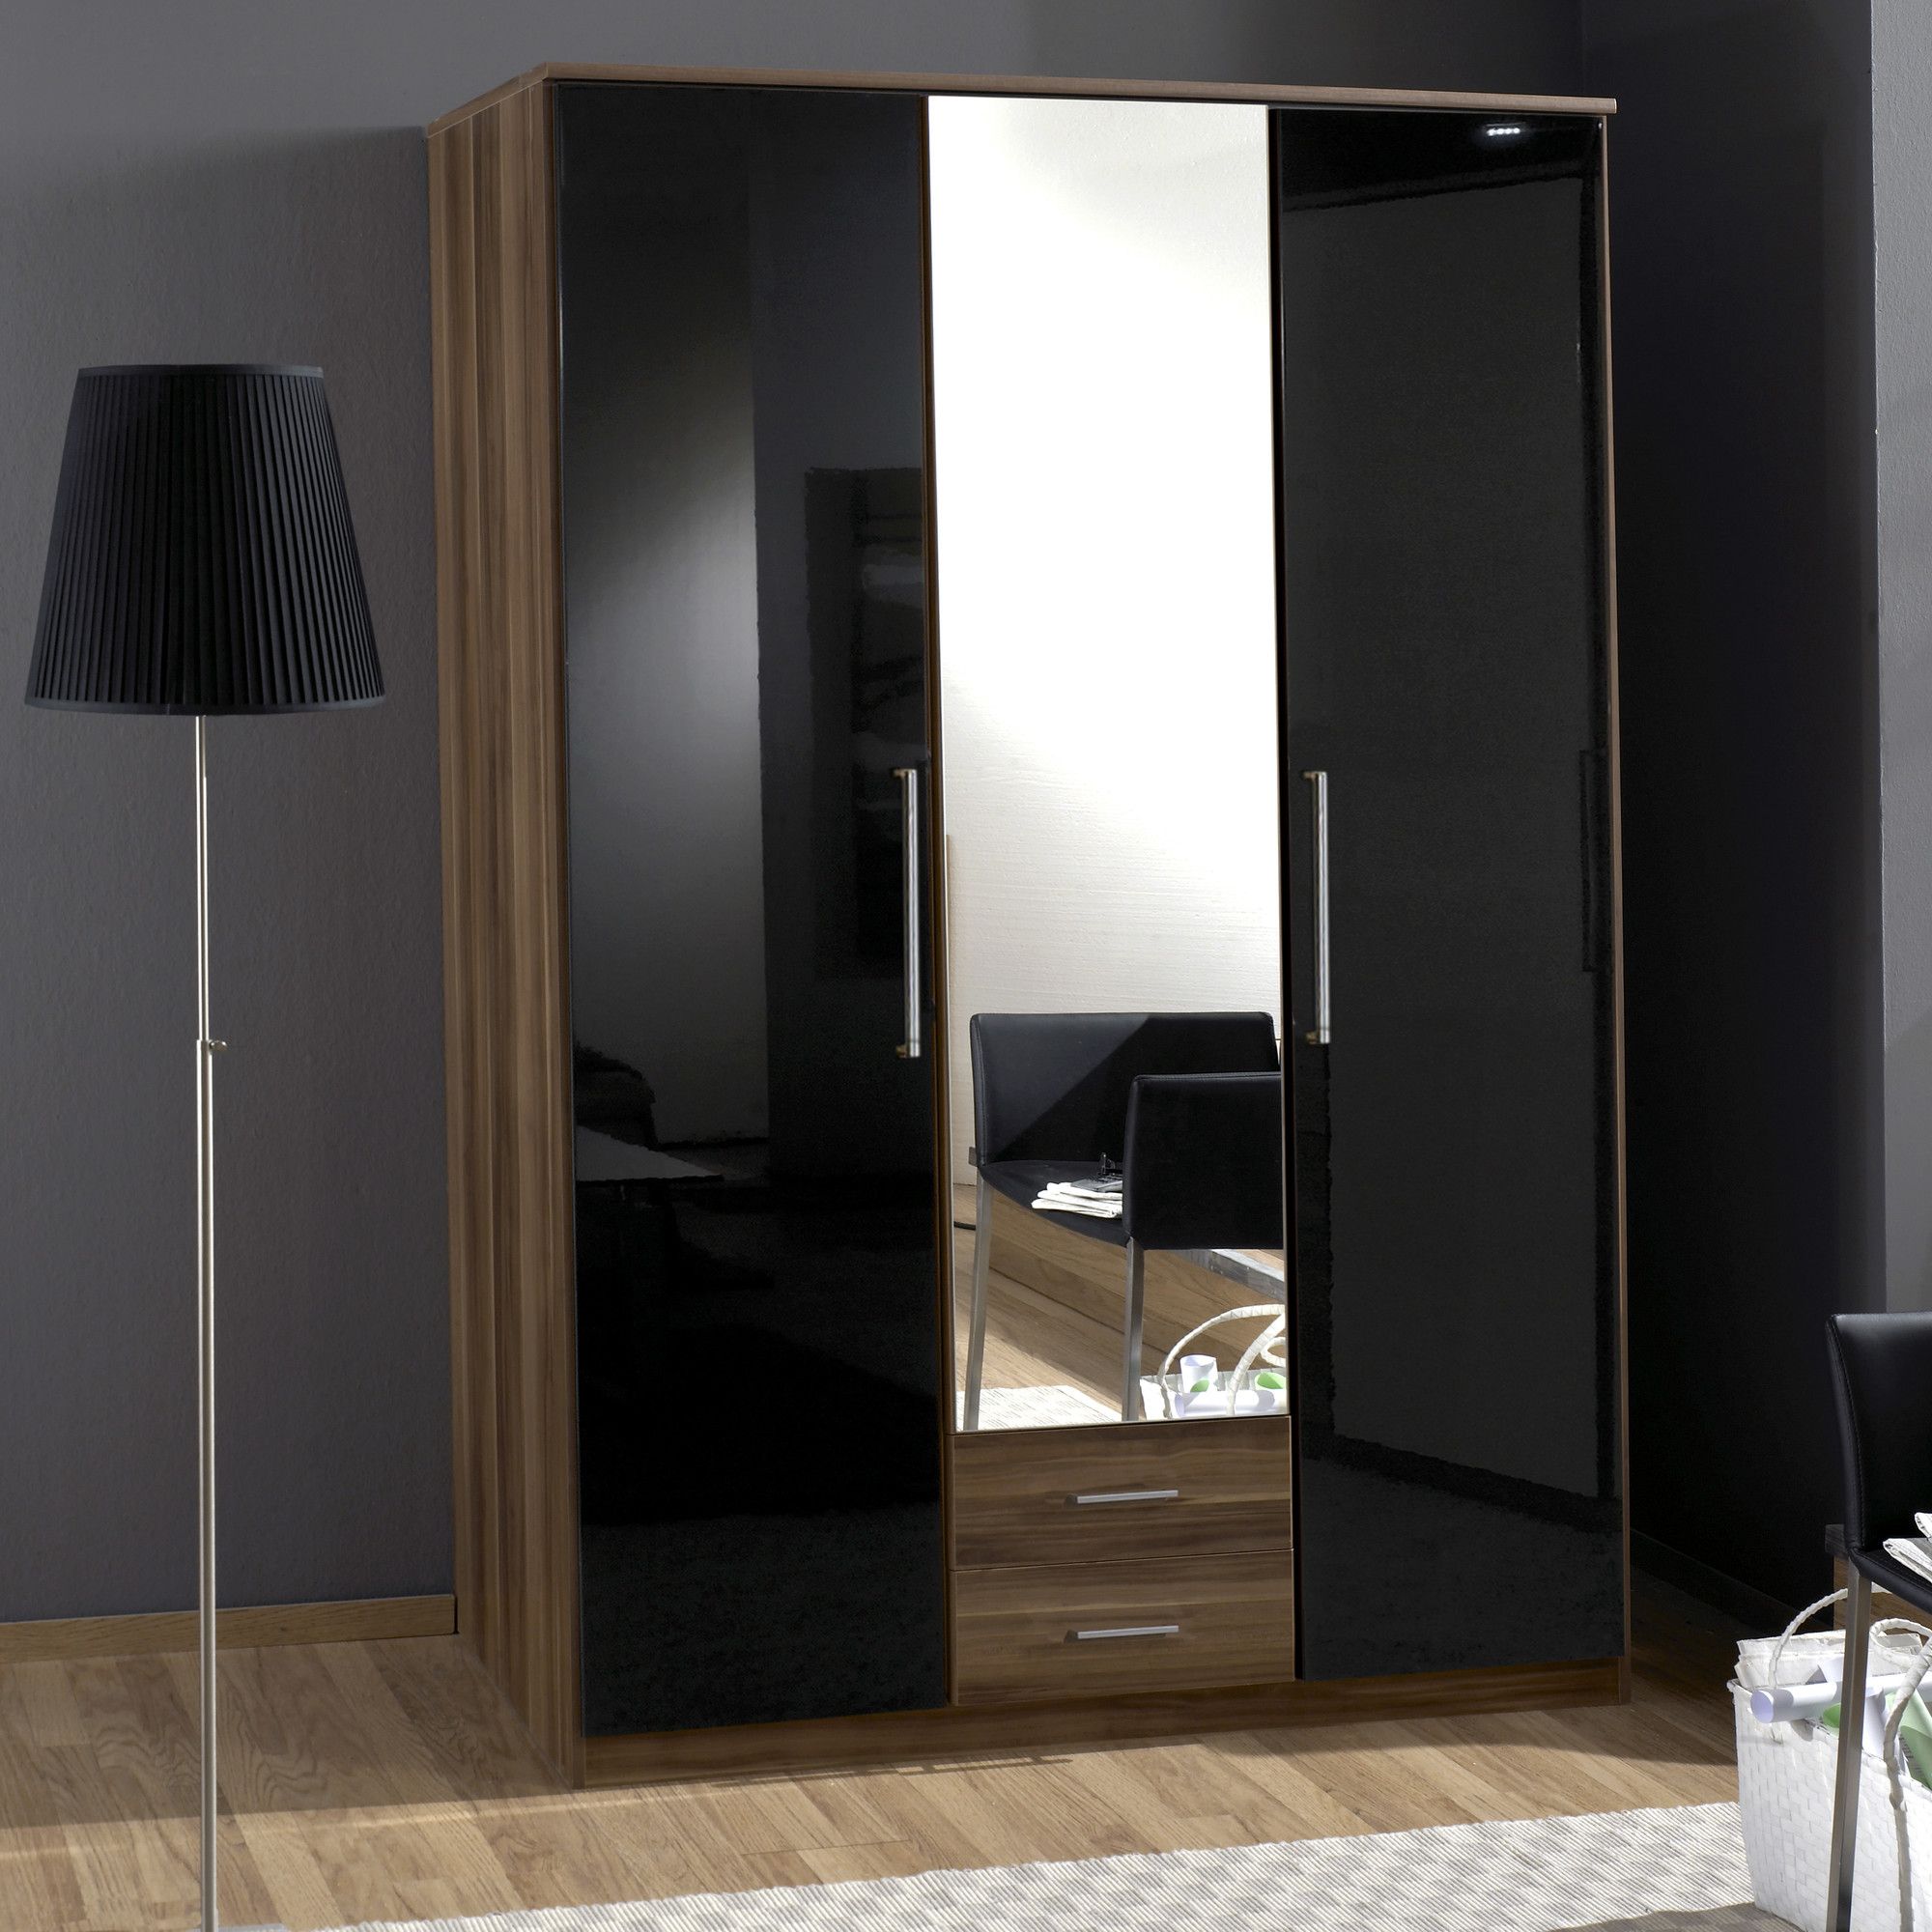 Amos Mann furniture Milano 3 Door 2 Drawer Wardrobe - Black and Walnut at Tescos Direct